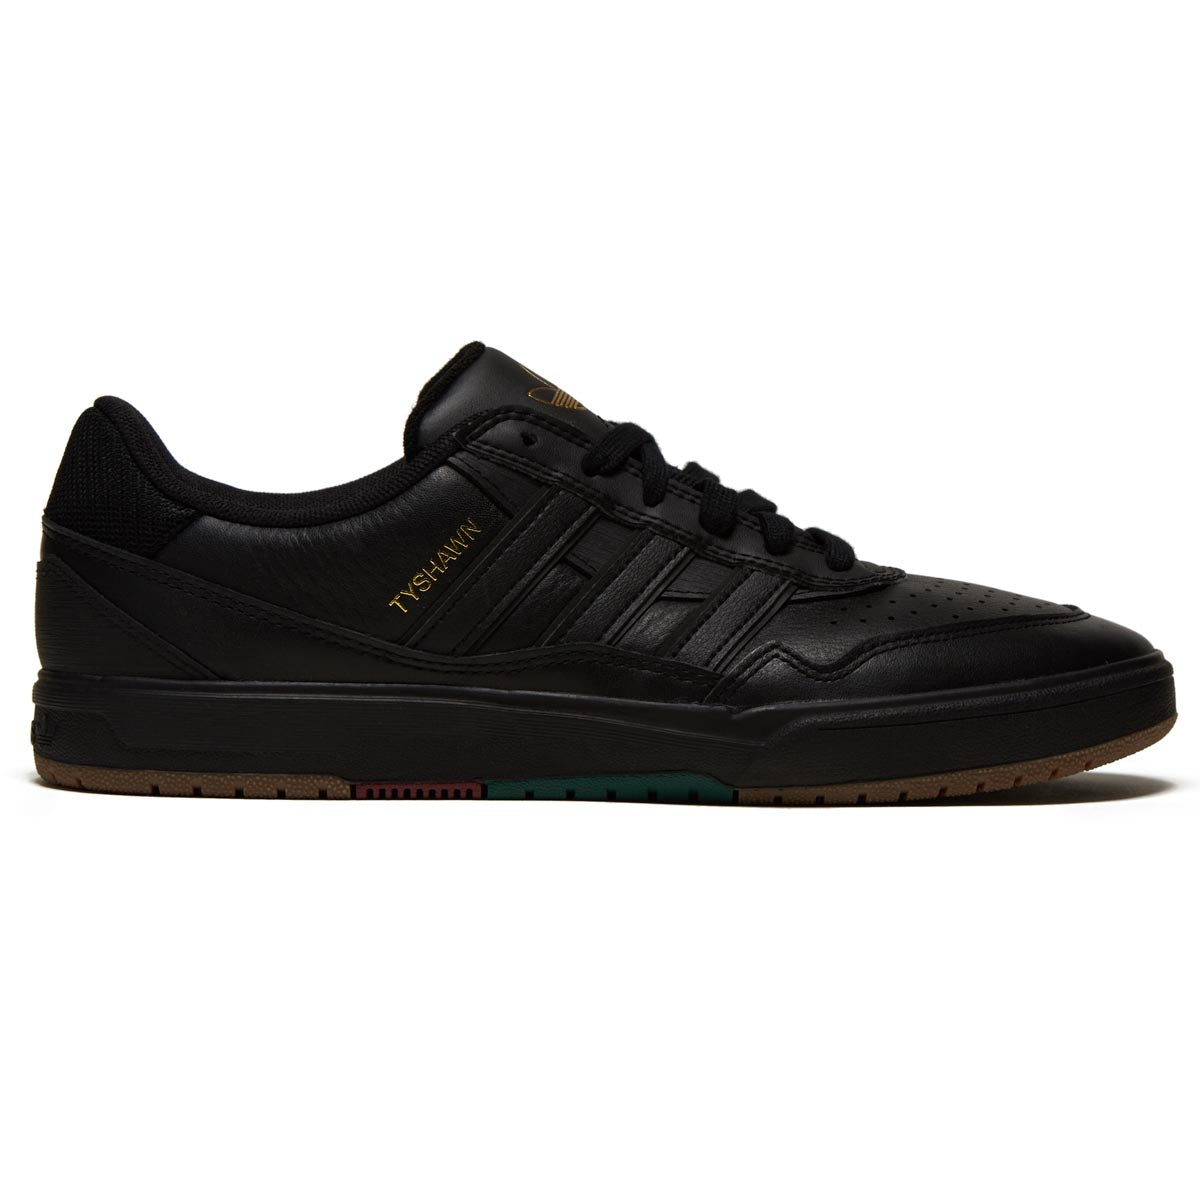 Adidas Tyshawn II Shoes - Black/Black/Court Green image 1